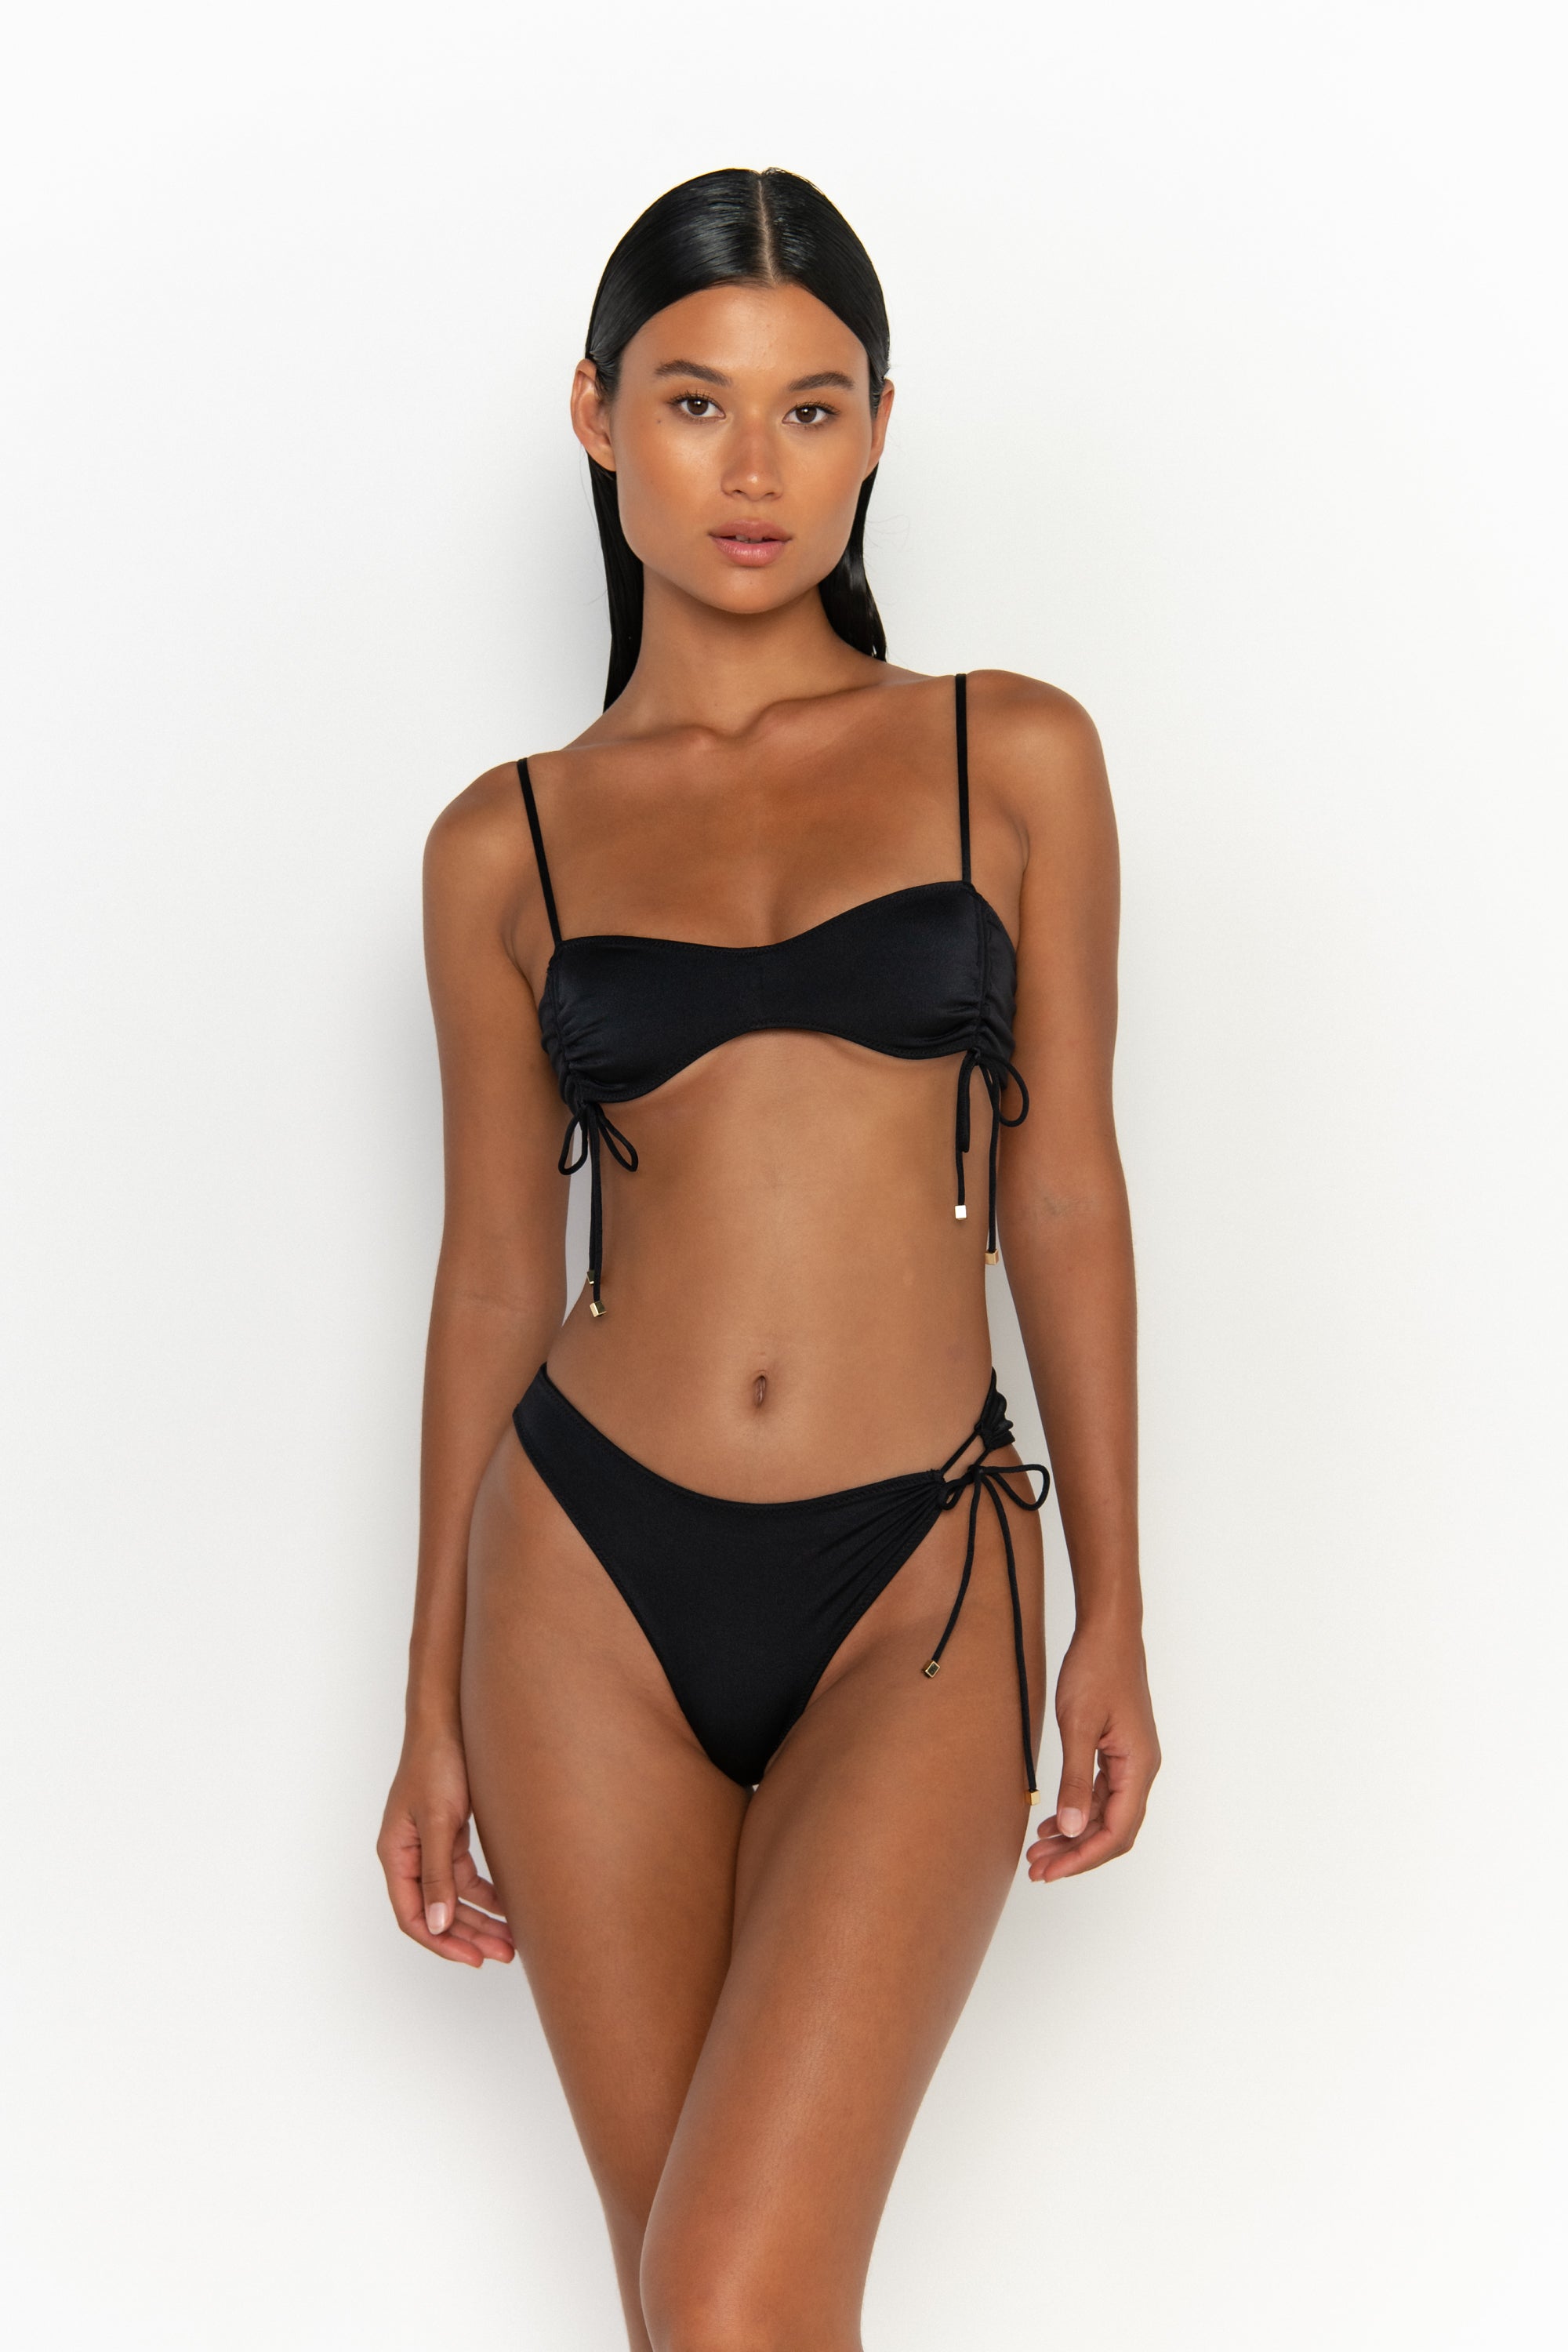 front view womens swimwear designed as high quality bikini from sommer swim swimwear australia - bea nero is a black bikini with bralette bikini top